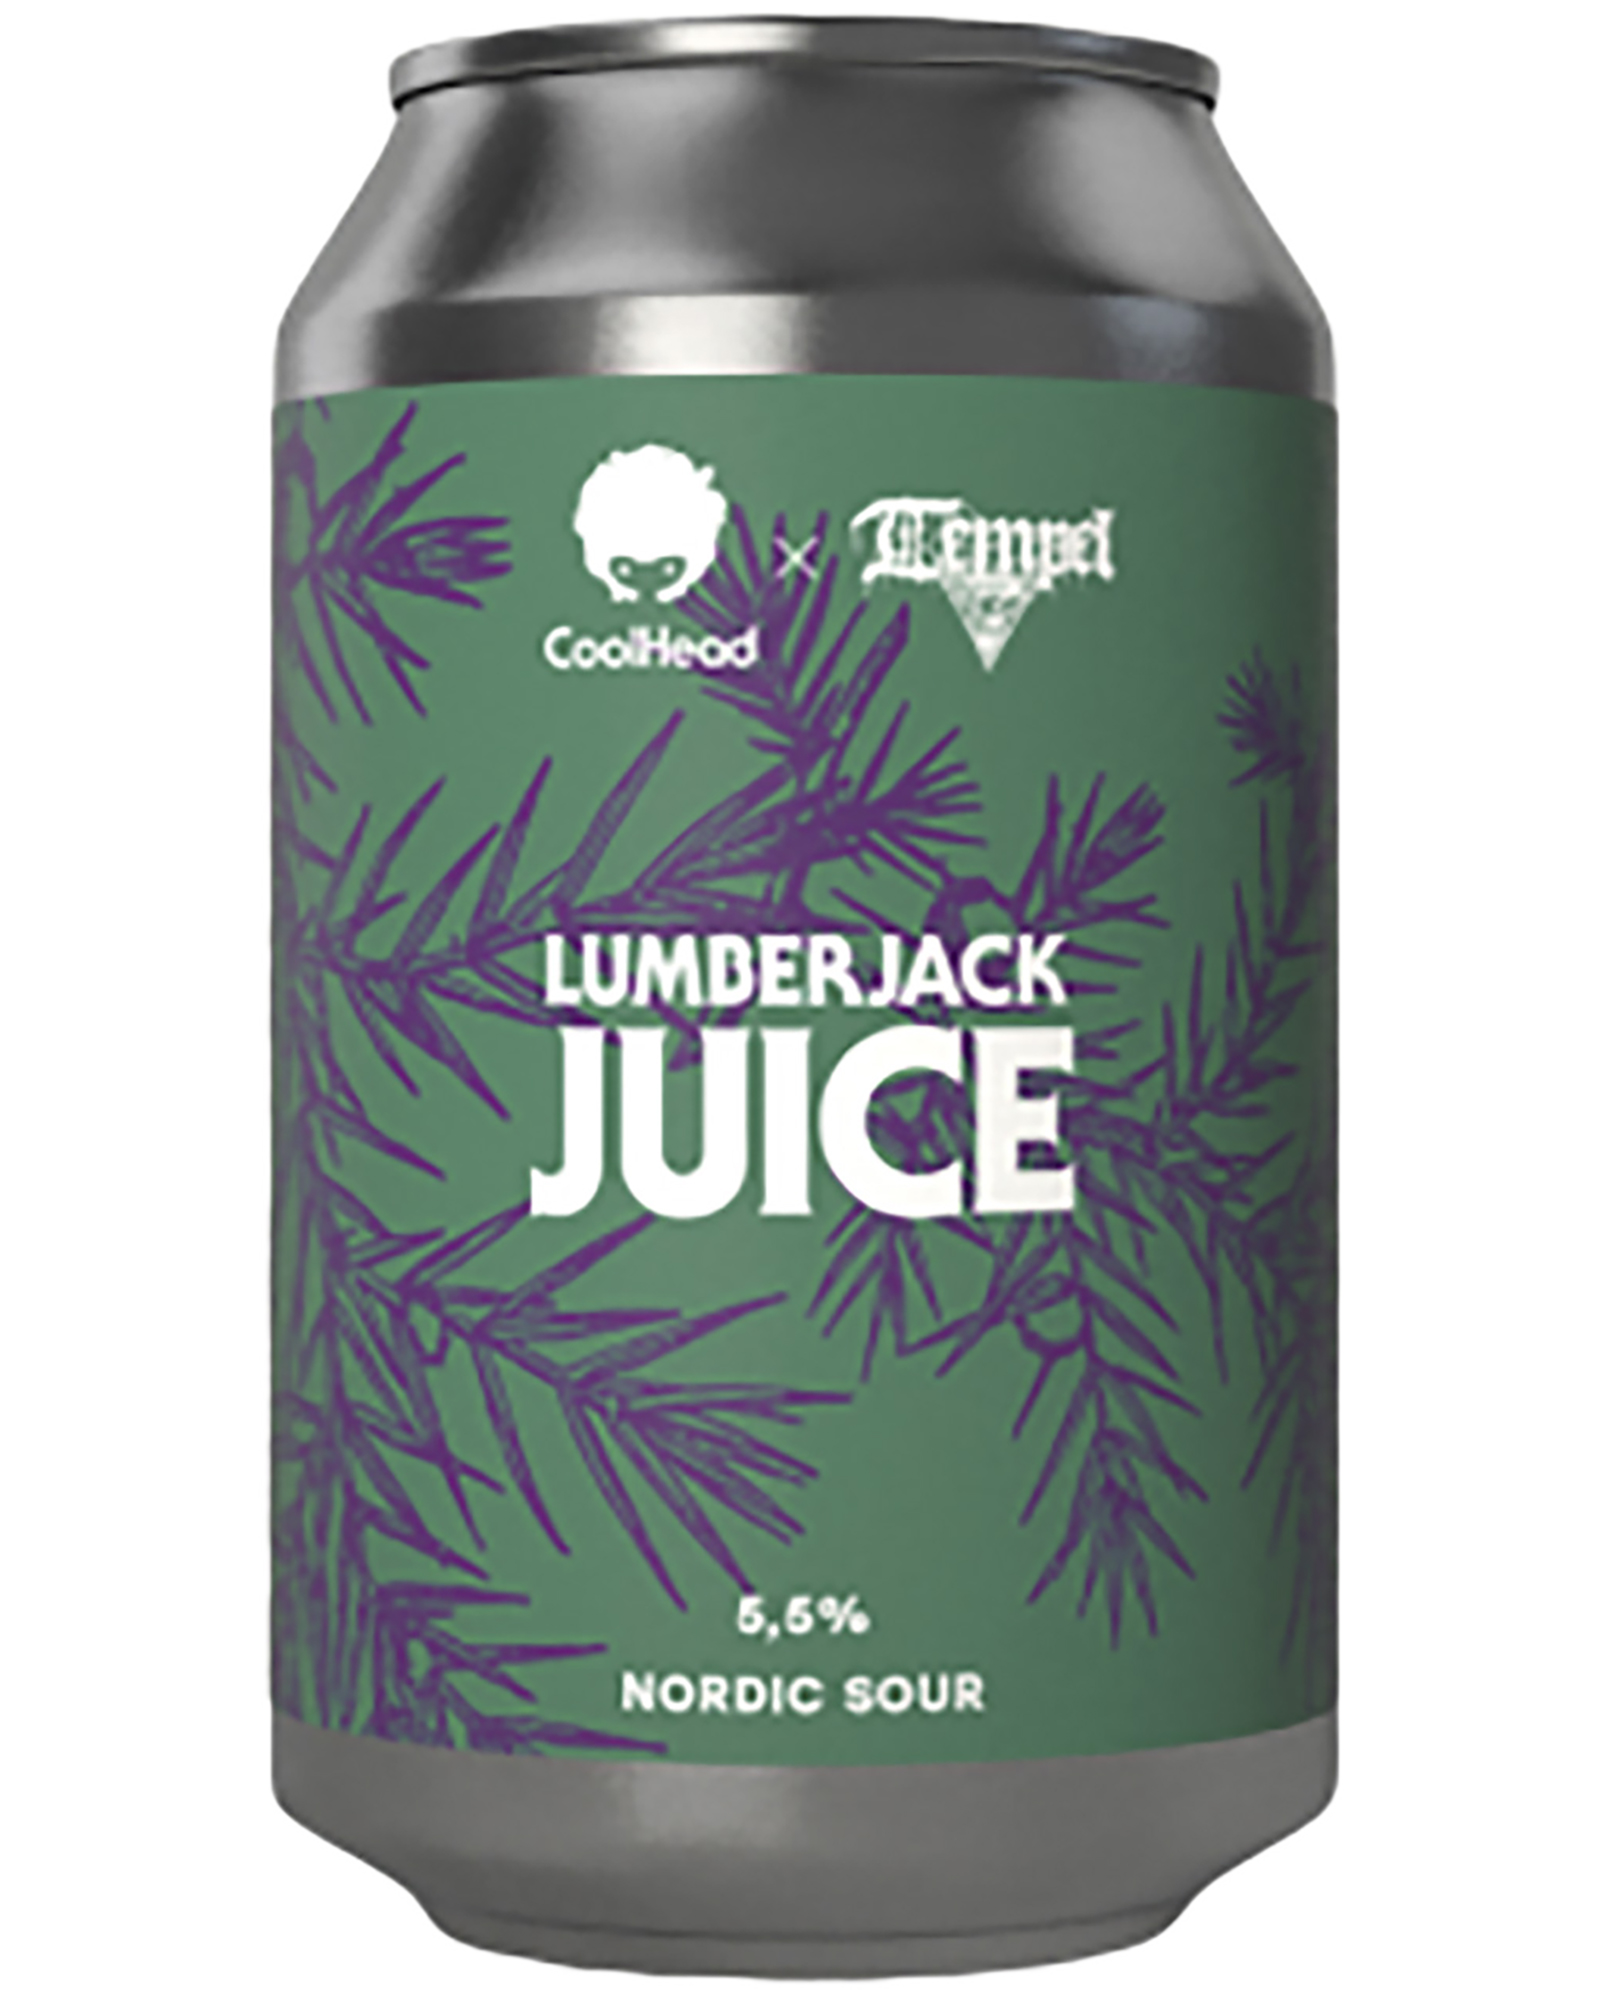 CoolHead Lumberjack Juice Nordic Sour can